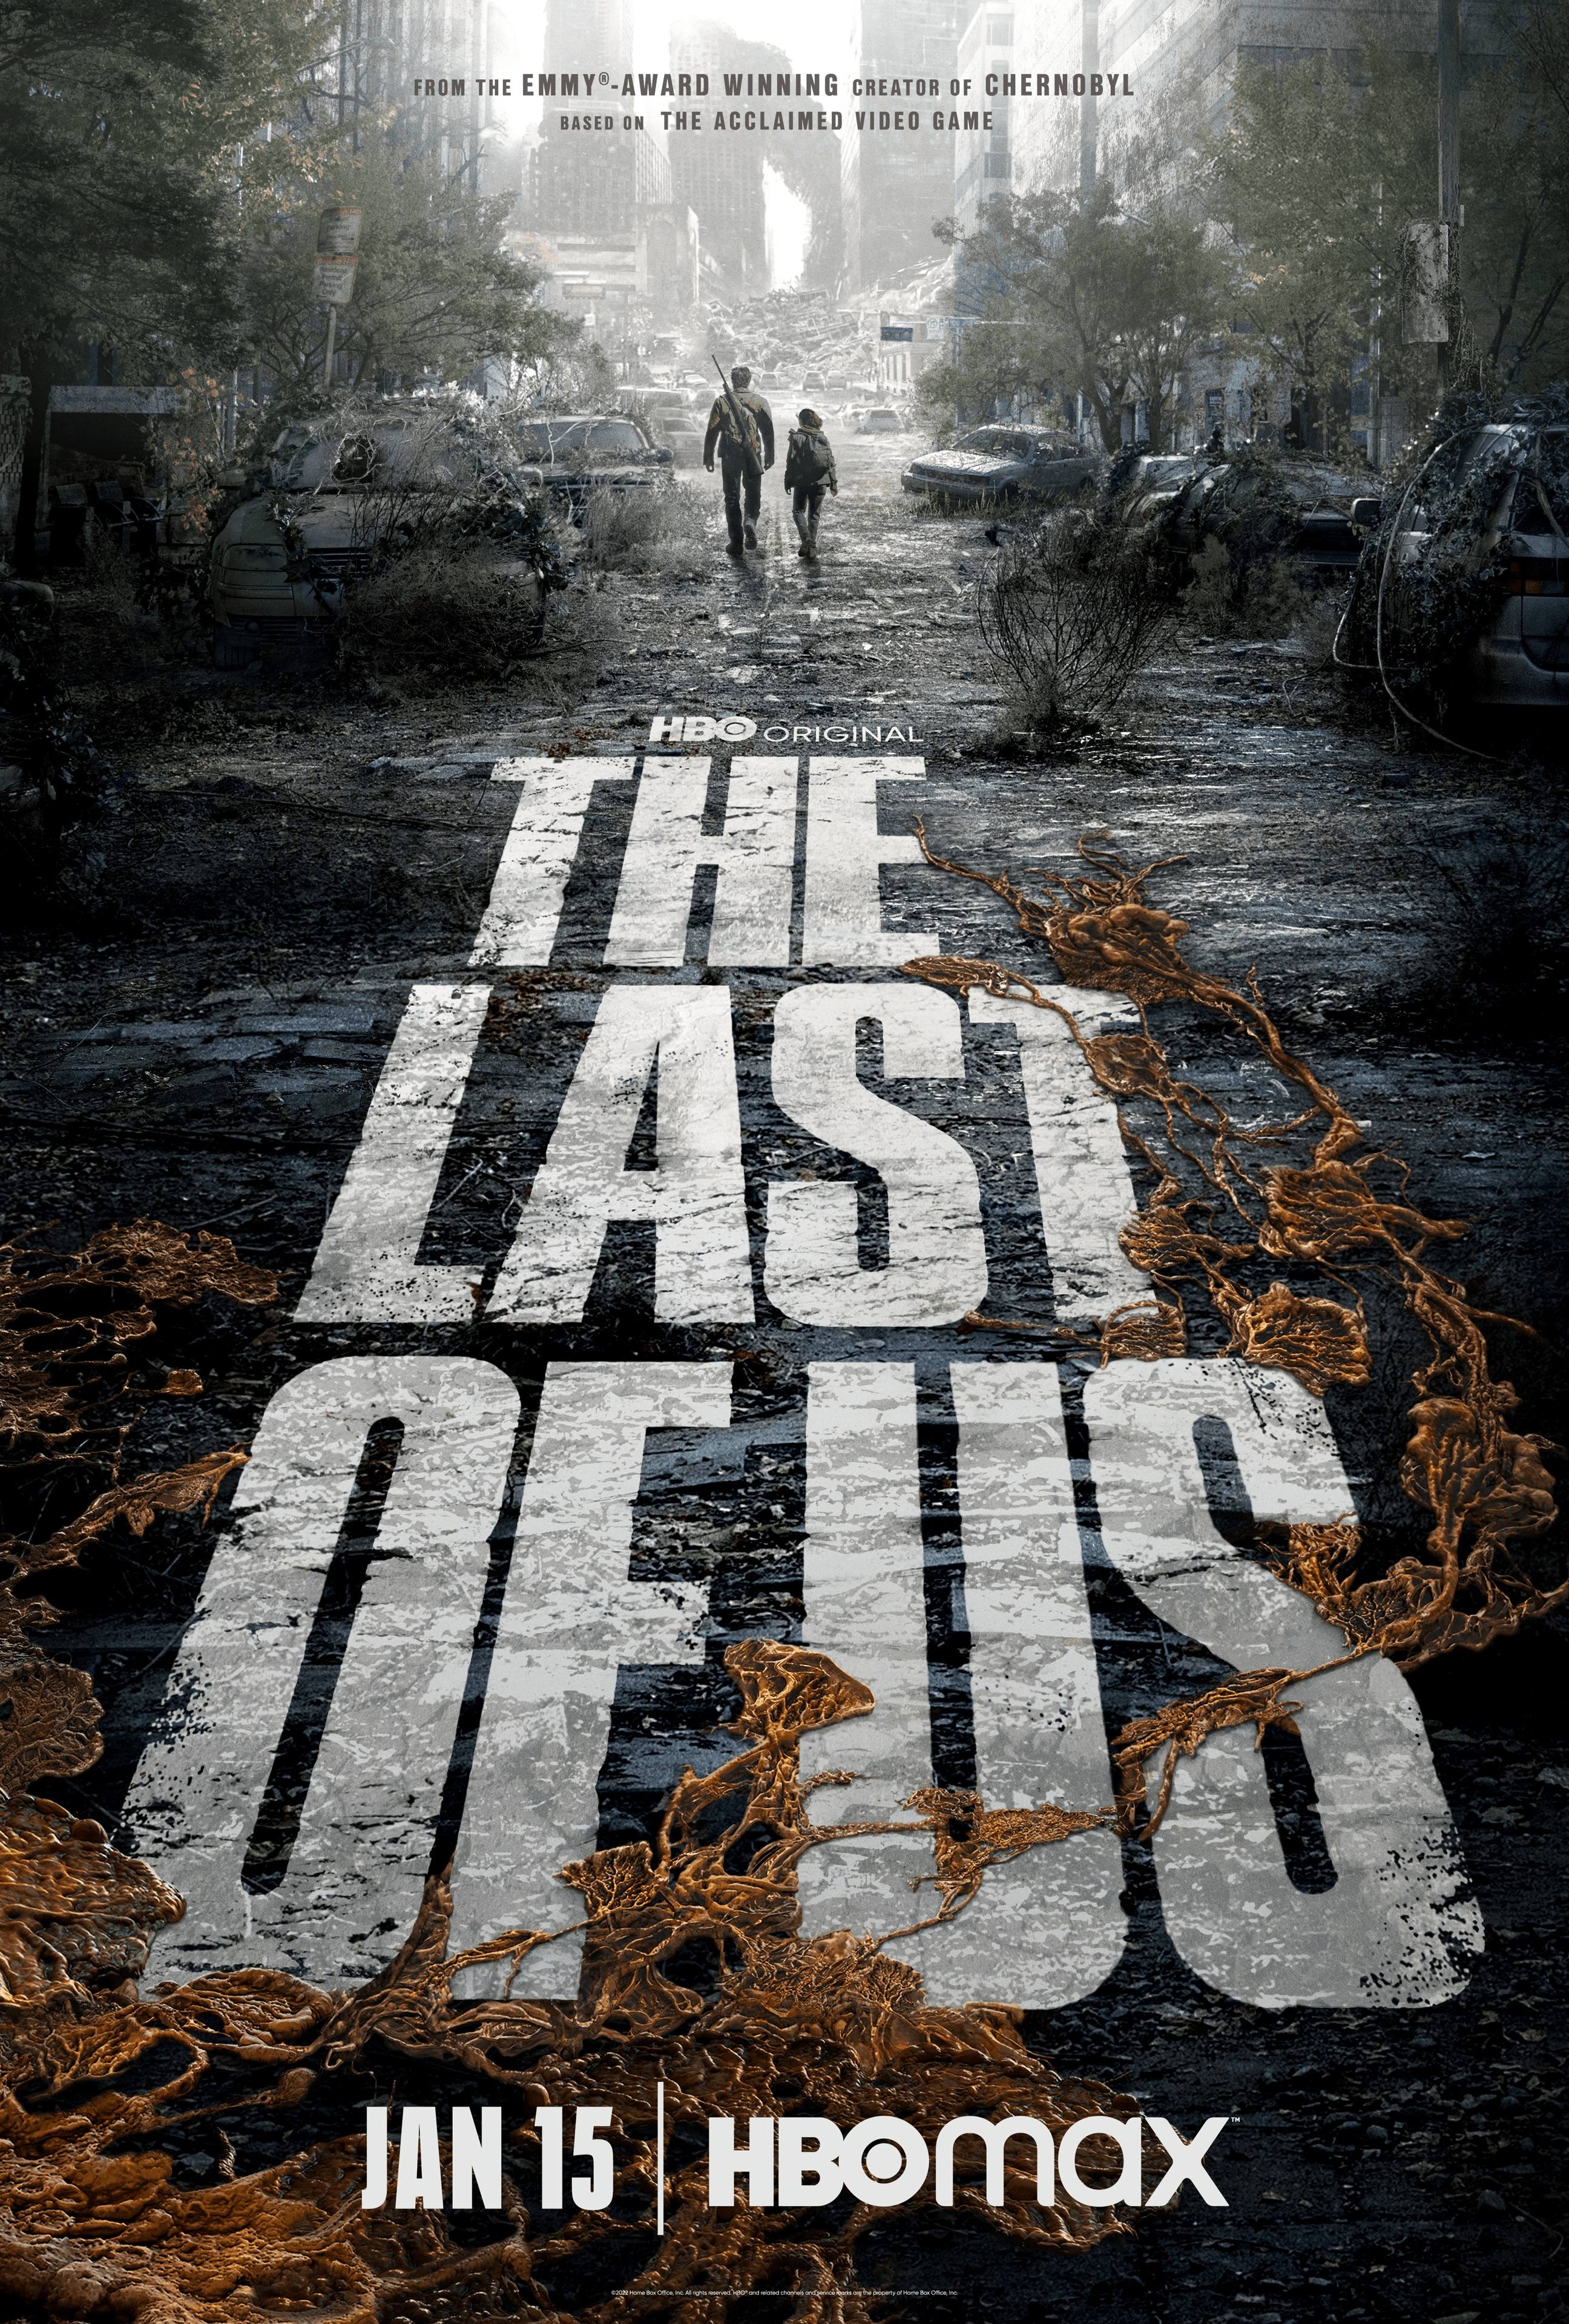 [TV] The Last of Us Season 1 (HBO Max)